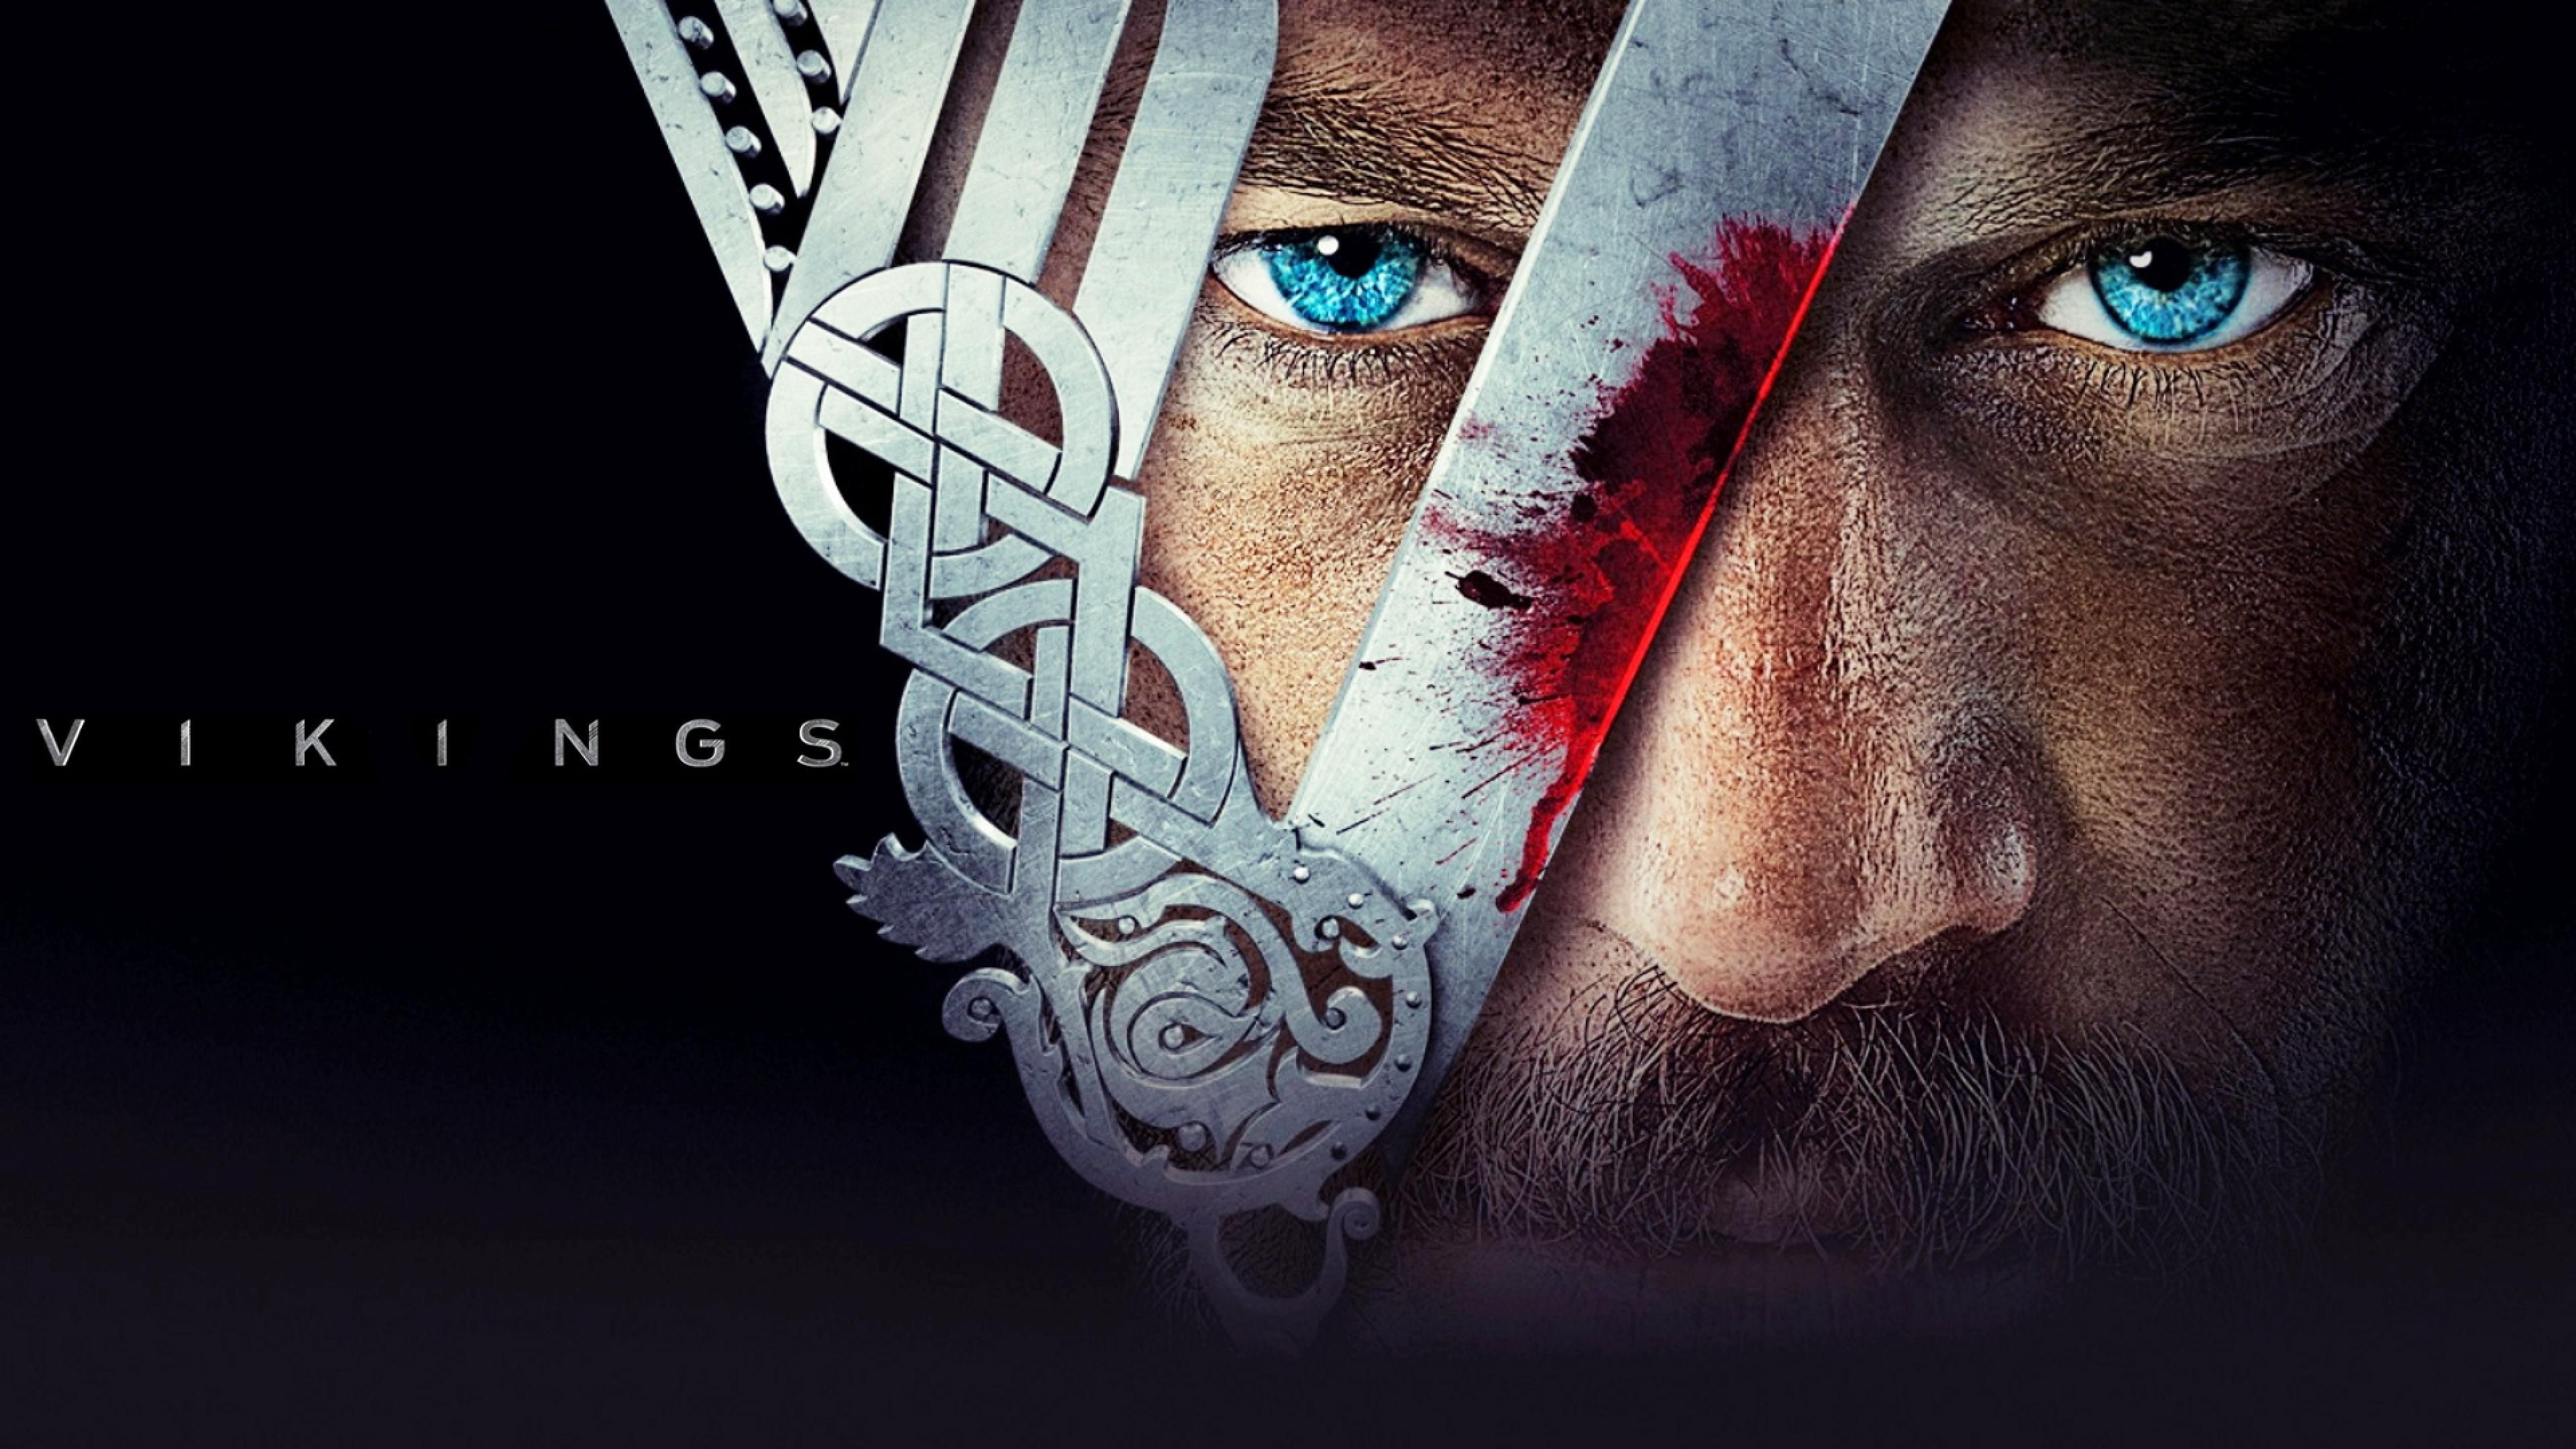 Vikings, Ragnar Lodbrok, human body part, portrait, human face